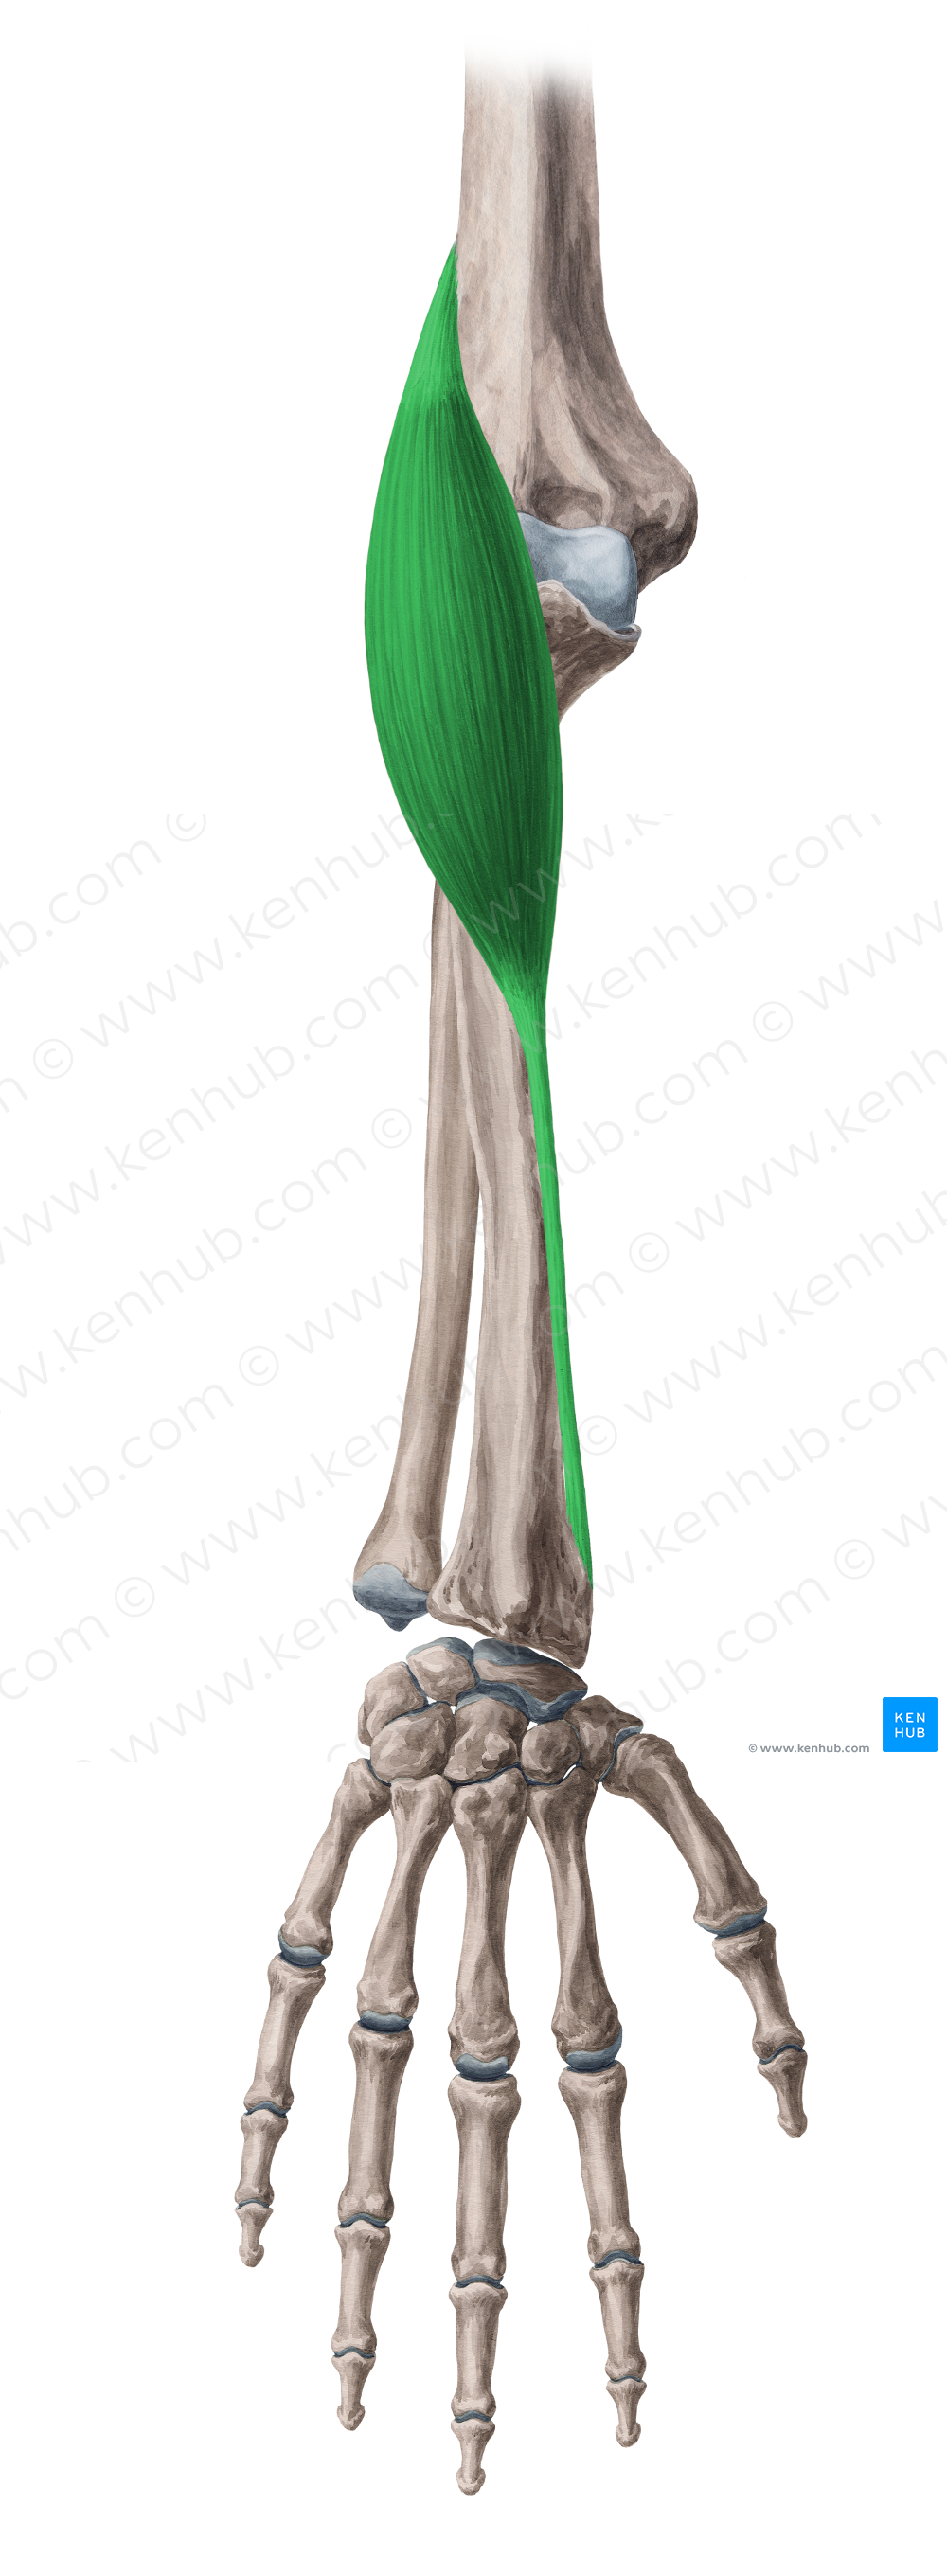 Brachioradialis muscle (#5232)